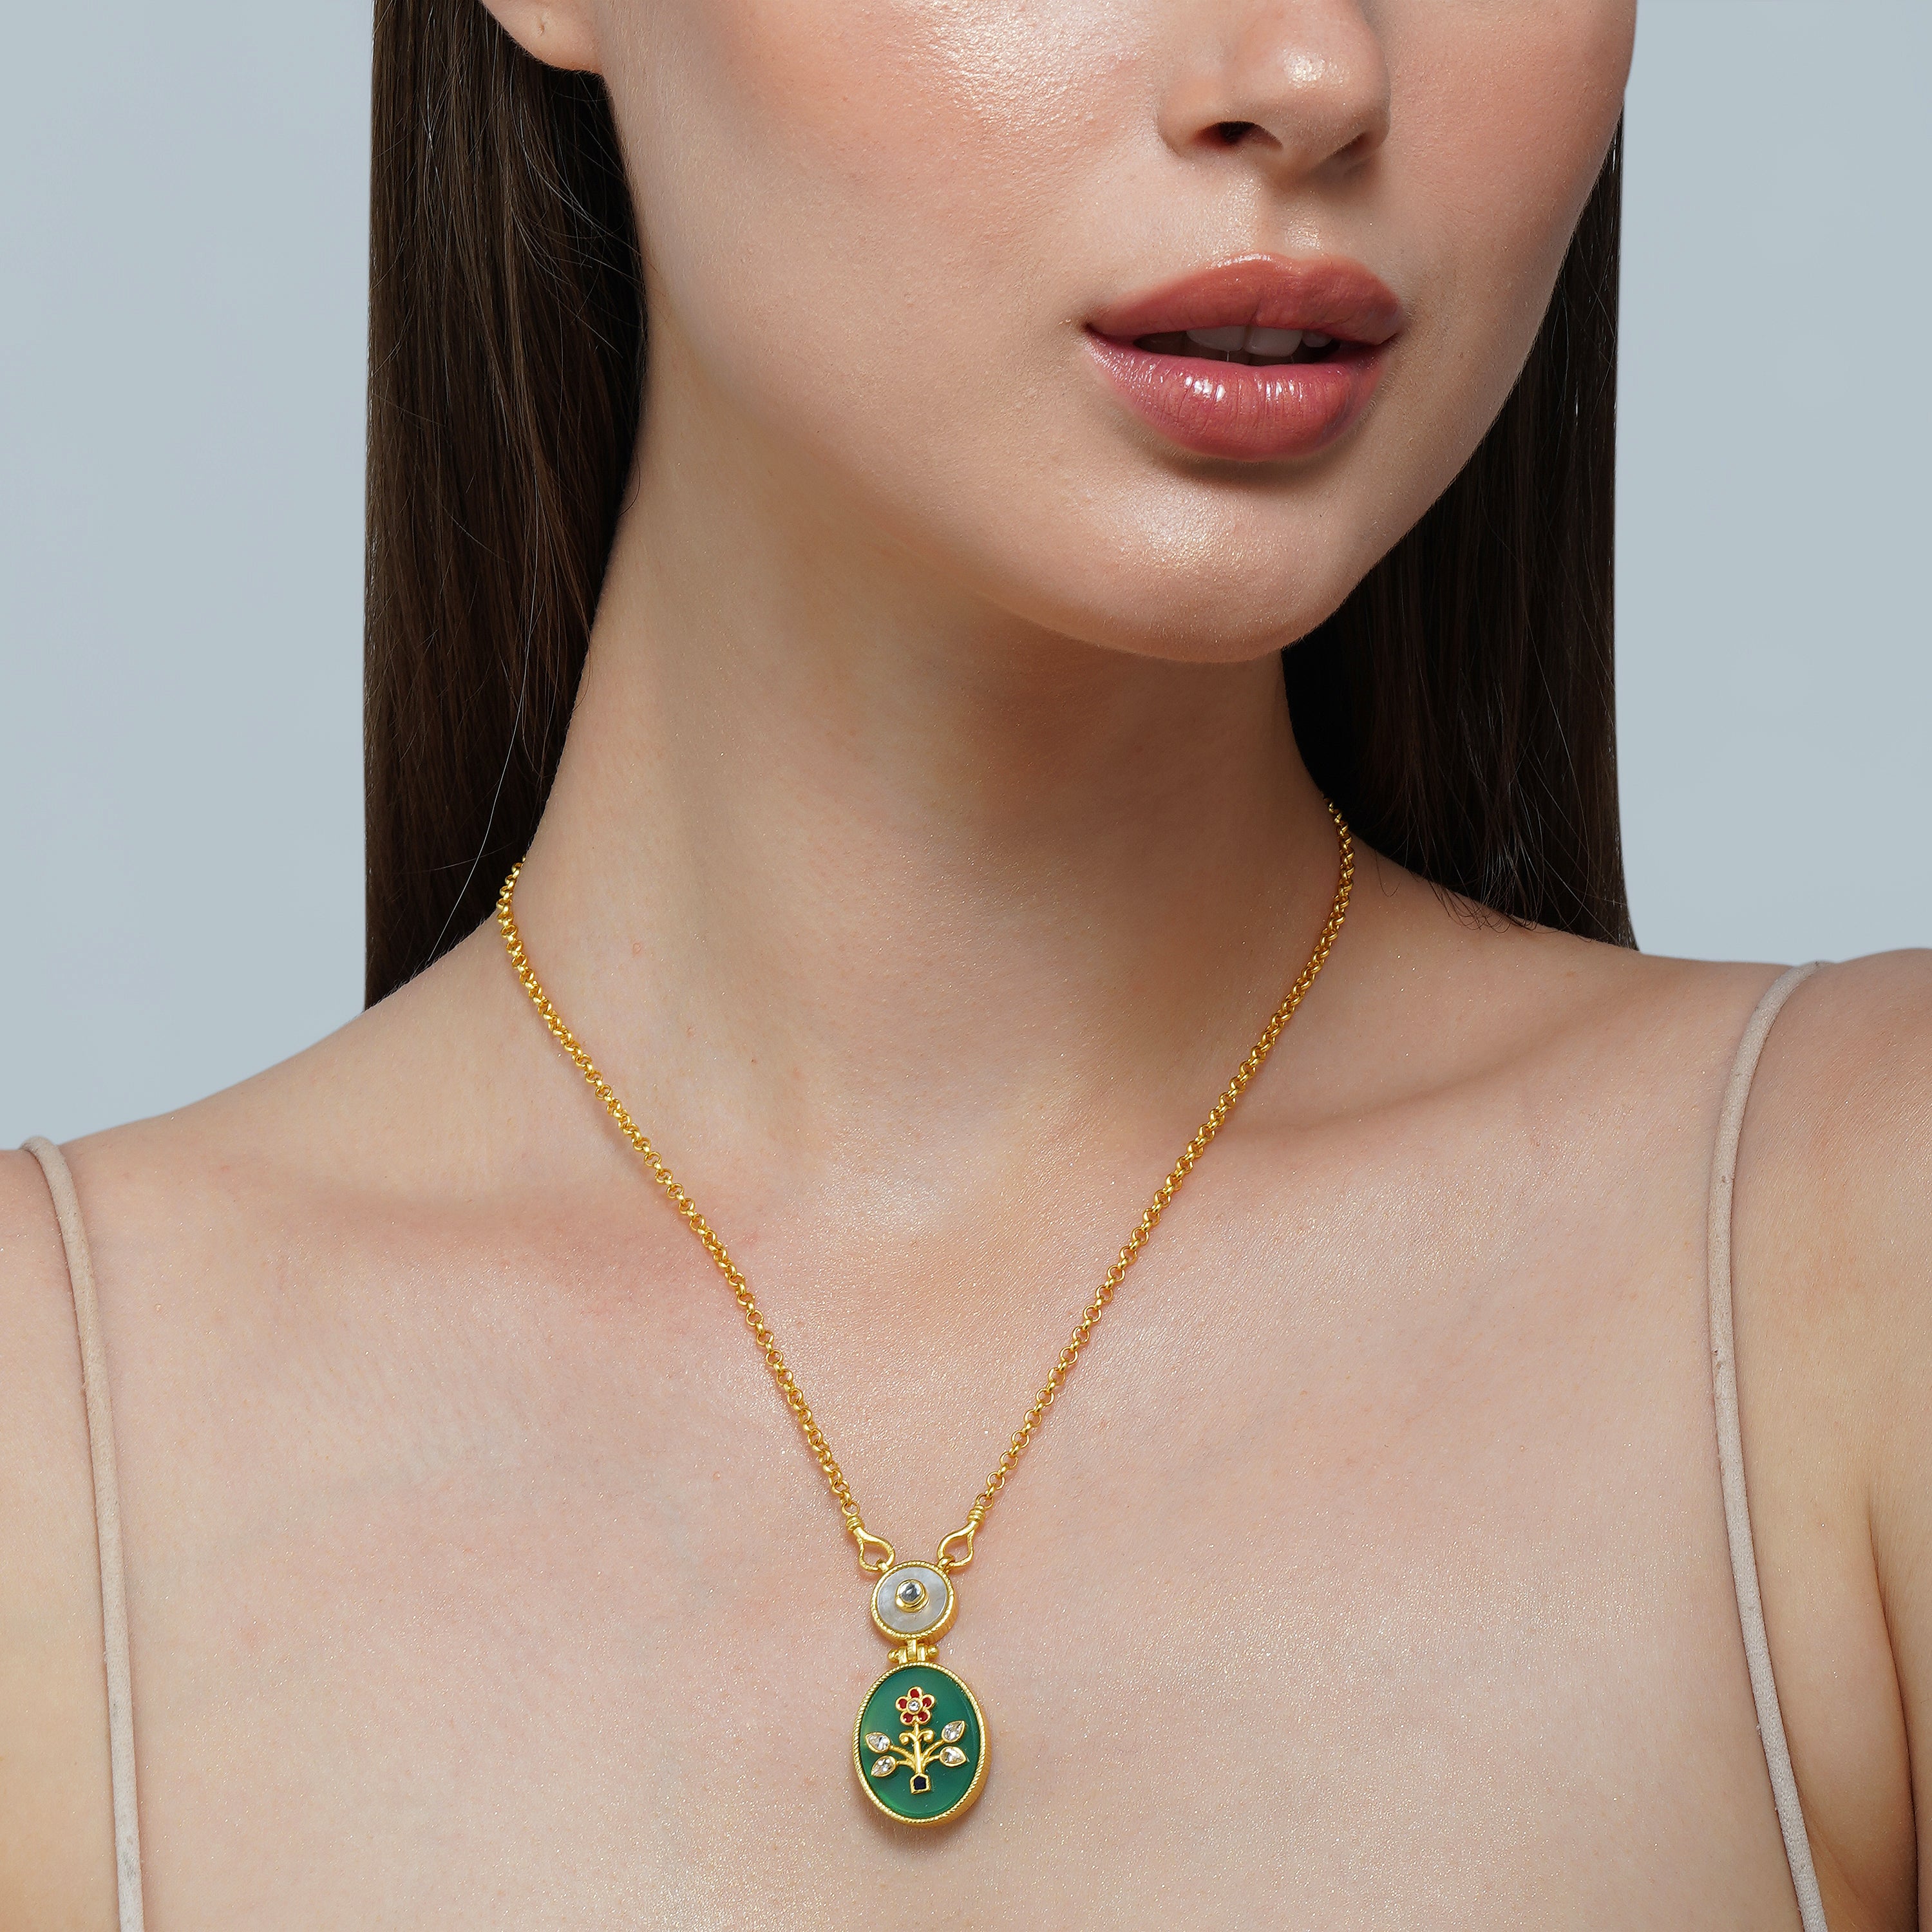 Vintage Queen Green Onyx Pendant Necklace